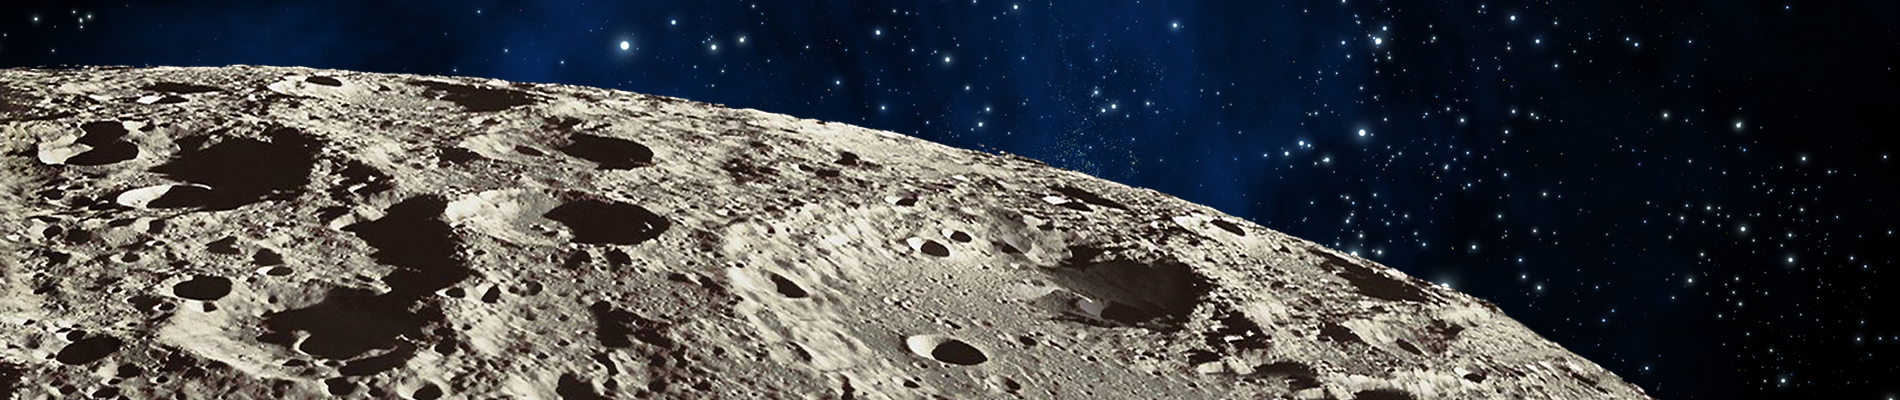 Header image for the Lunar Rover challenge site